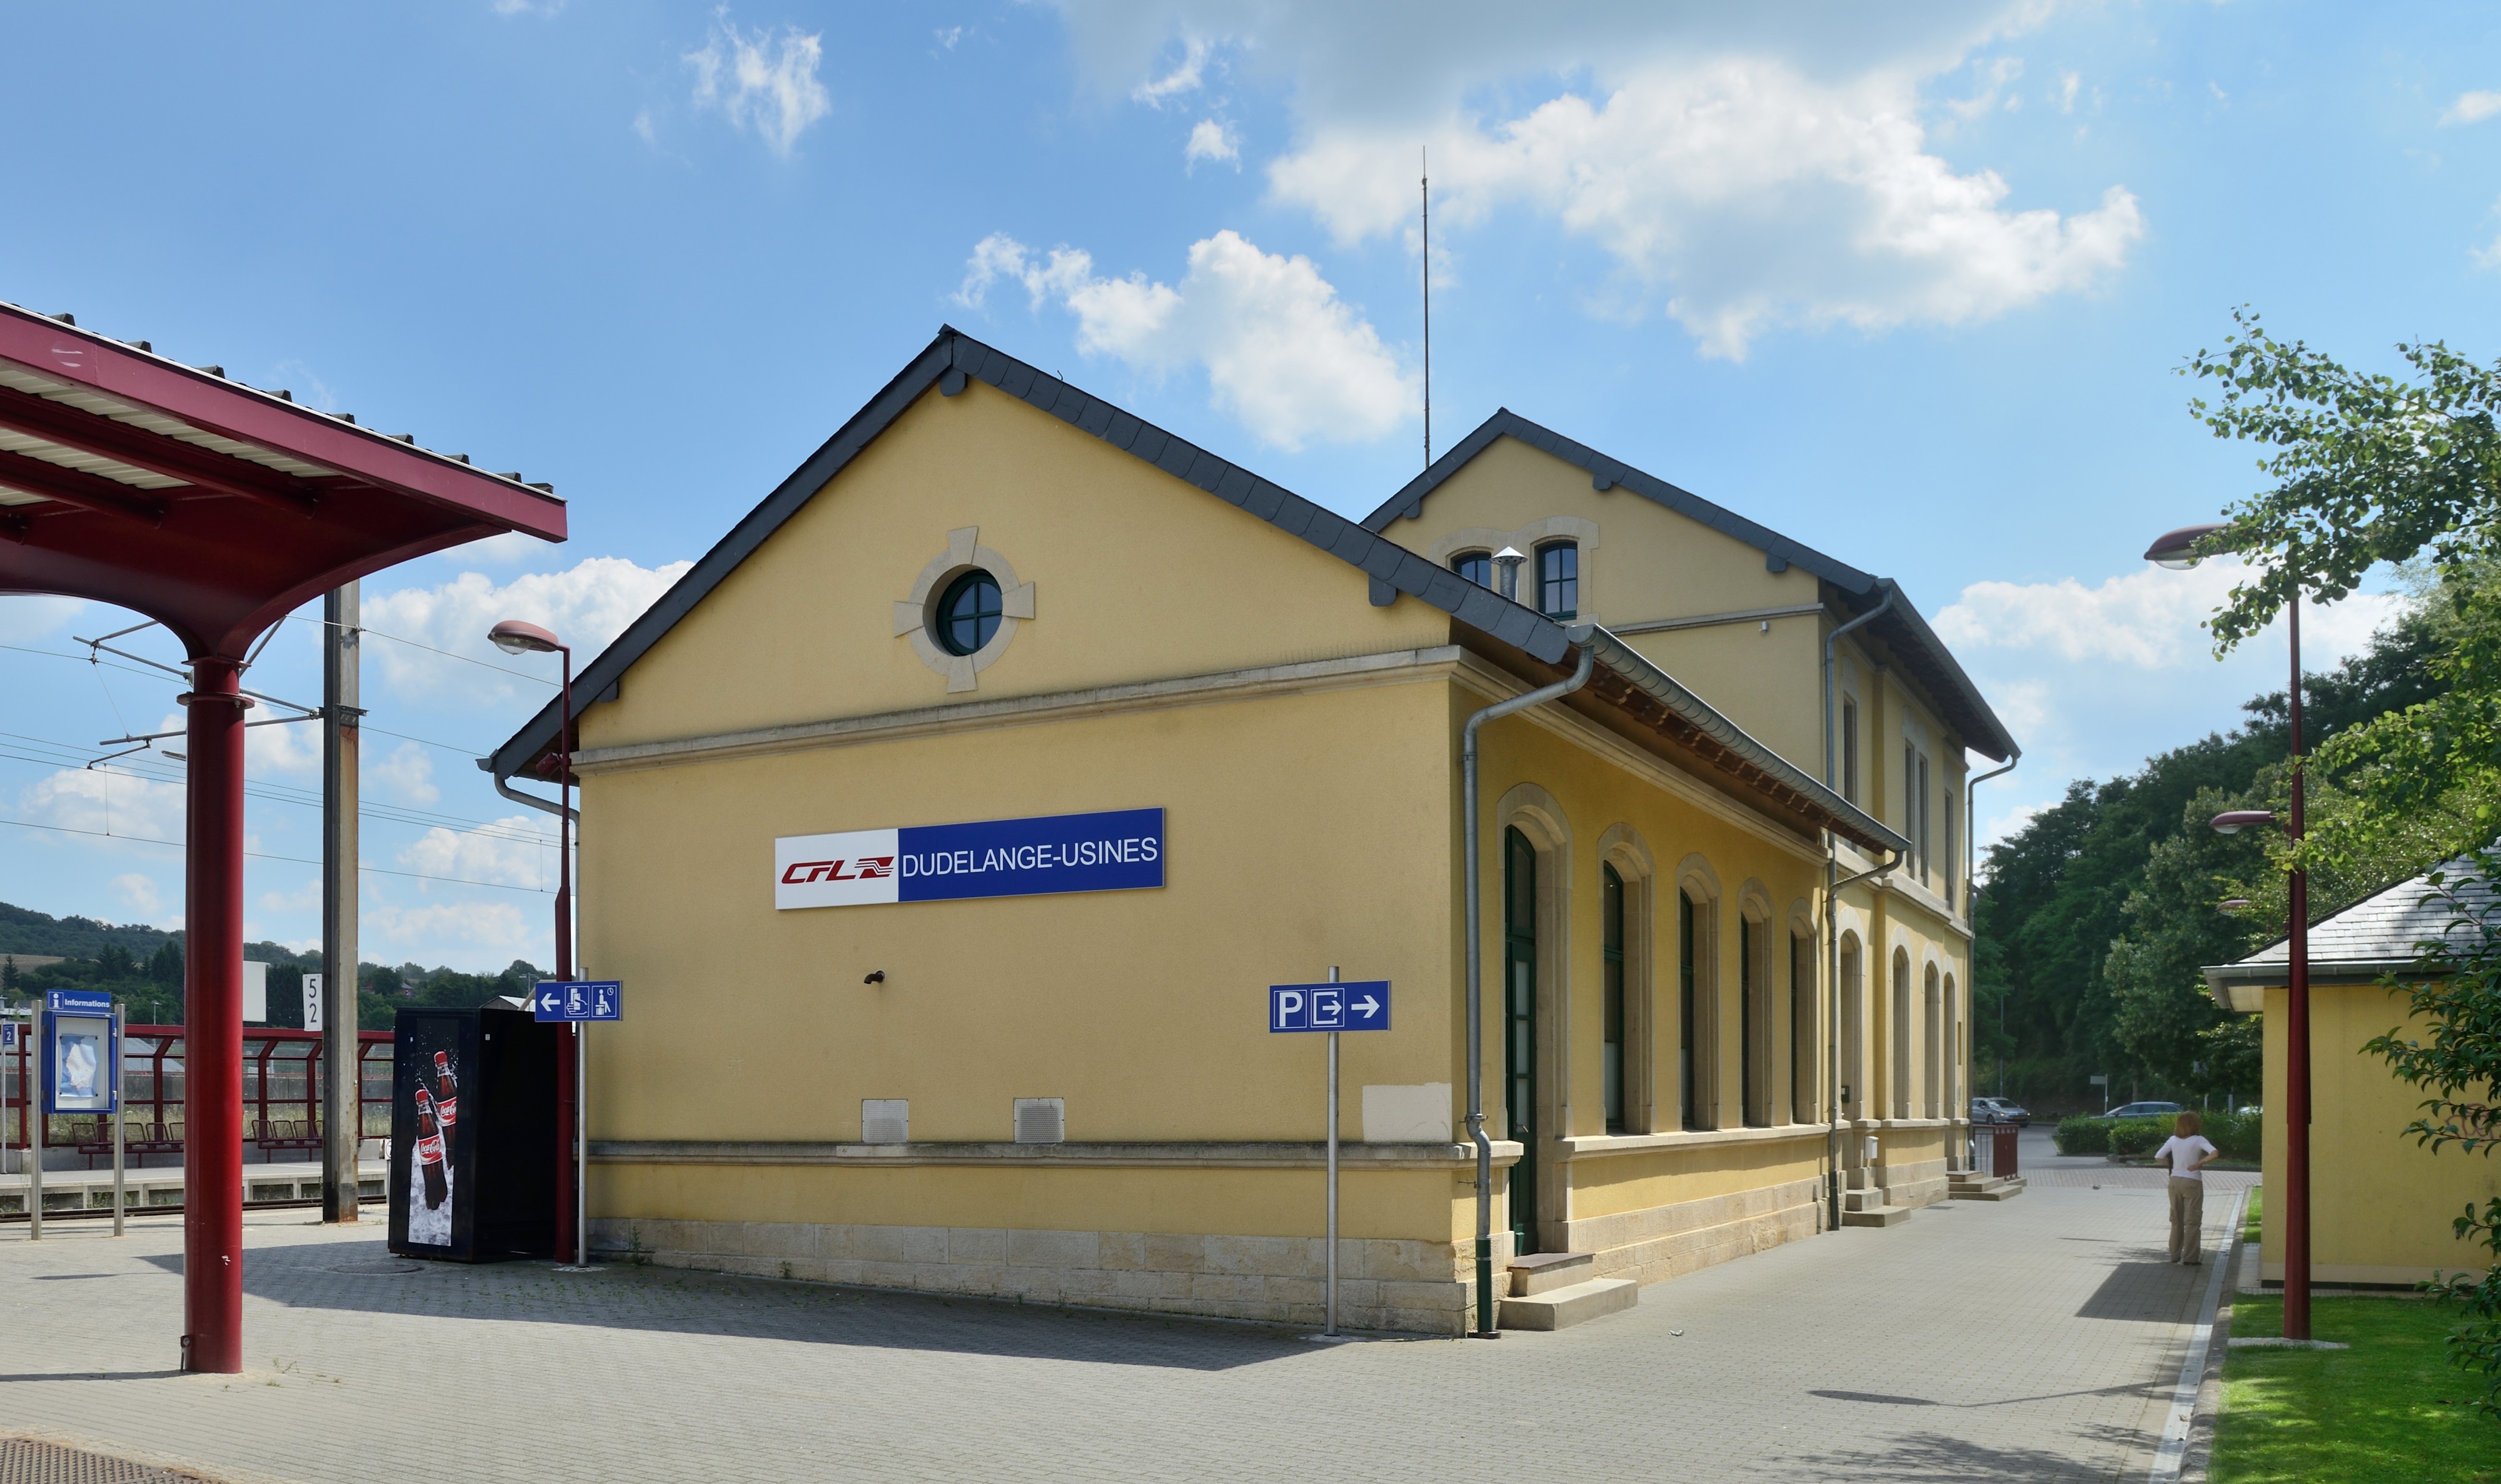 Gare Dudelange-Usines 2014